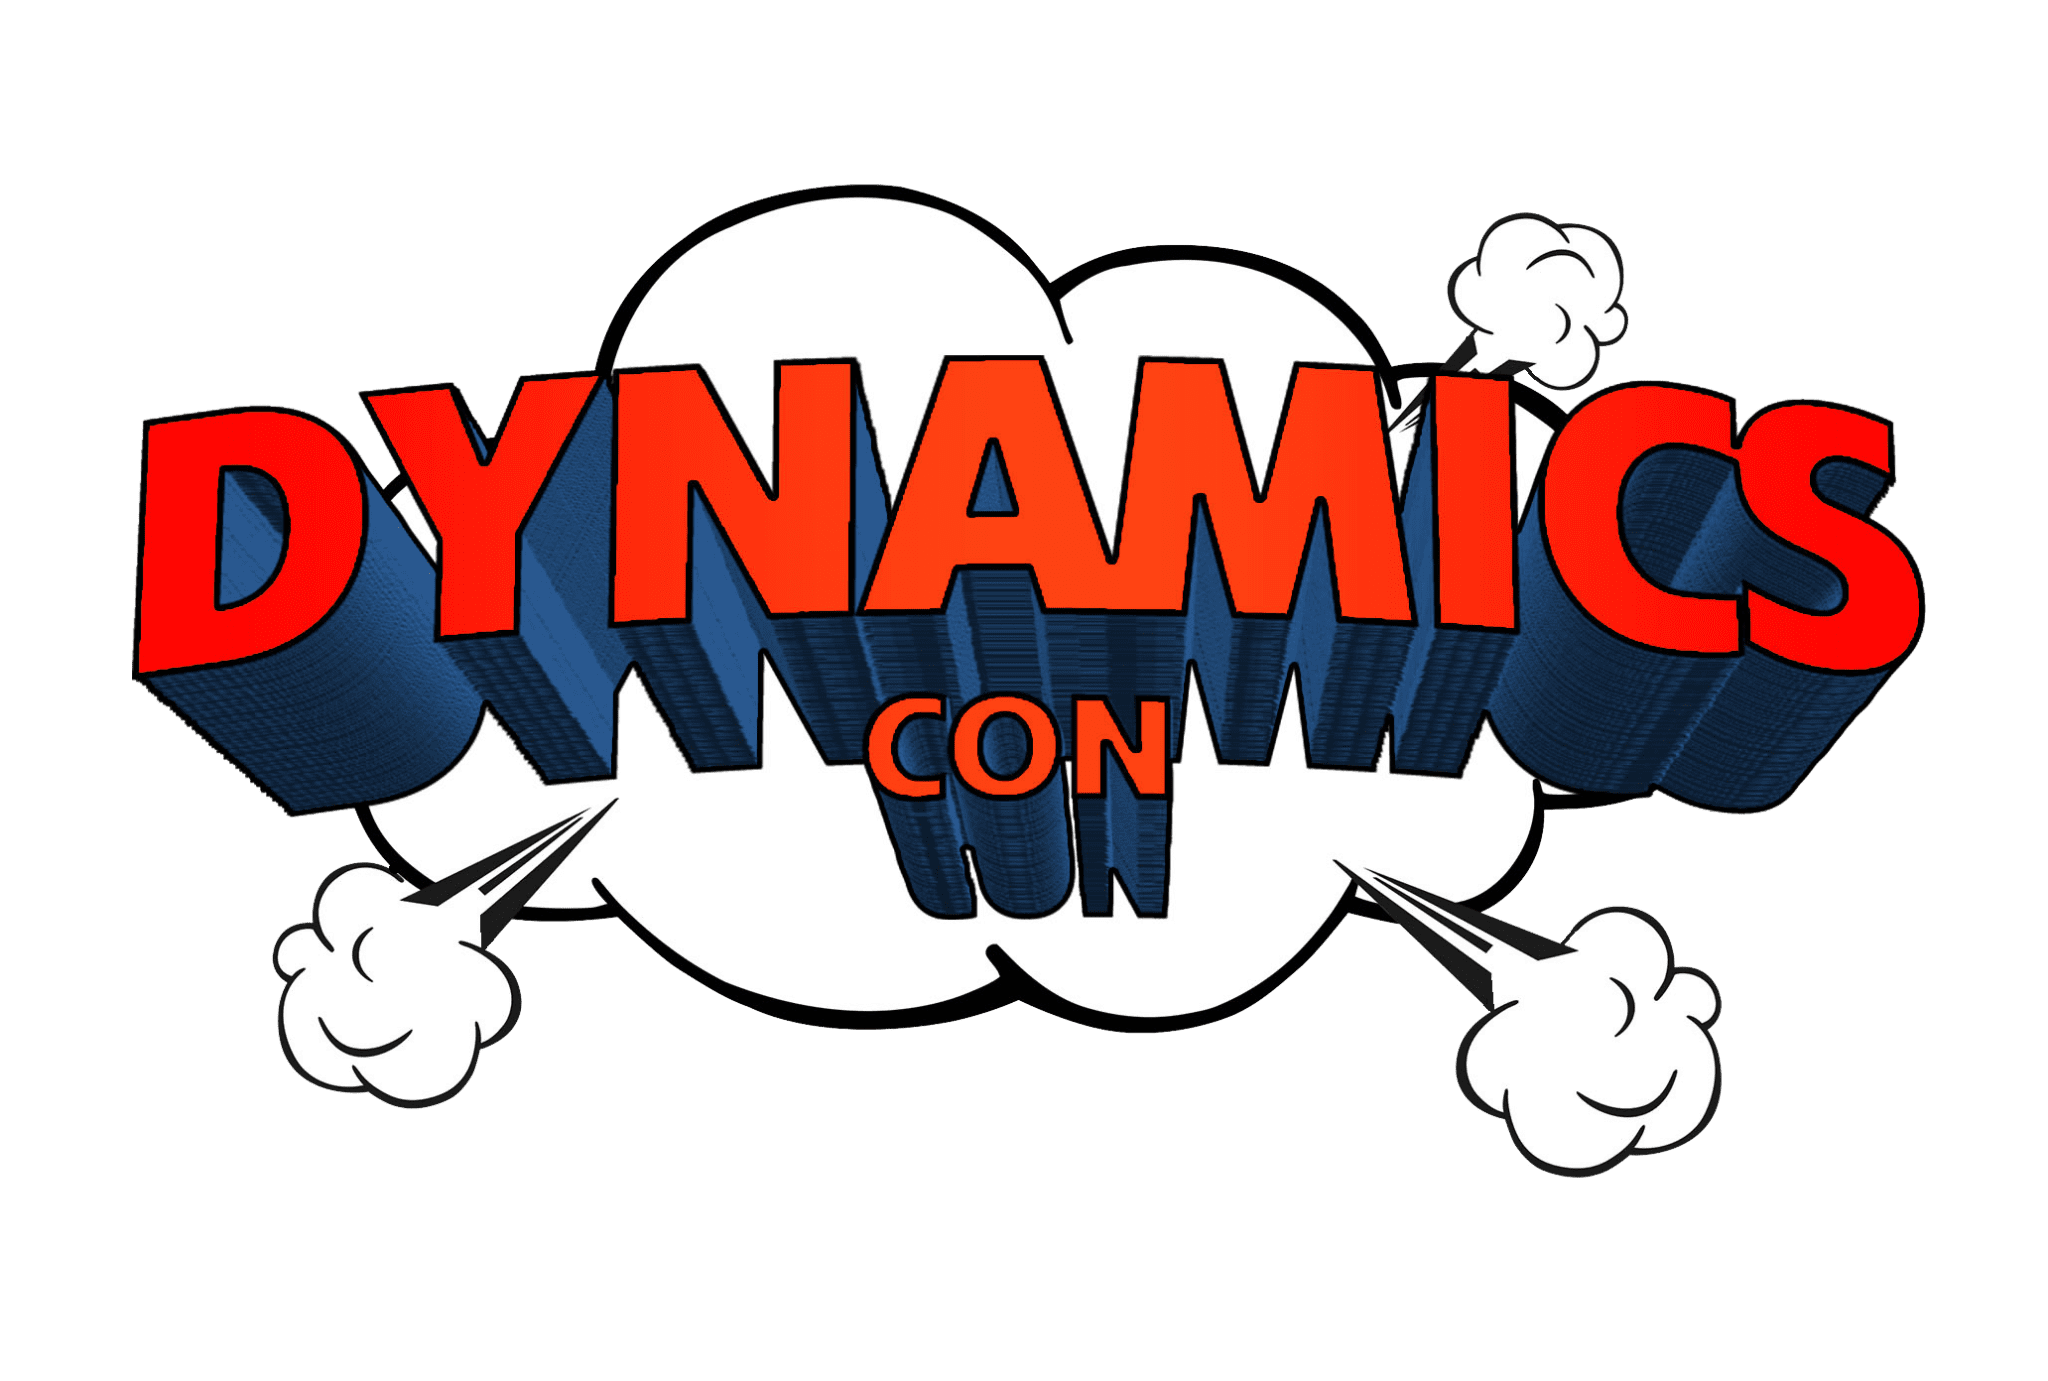 Dynamicscon